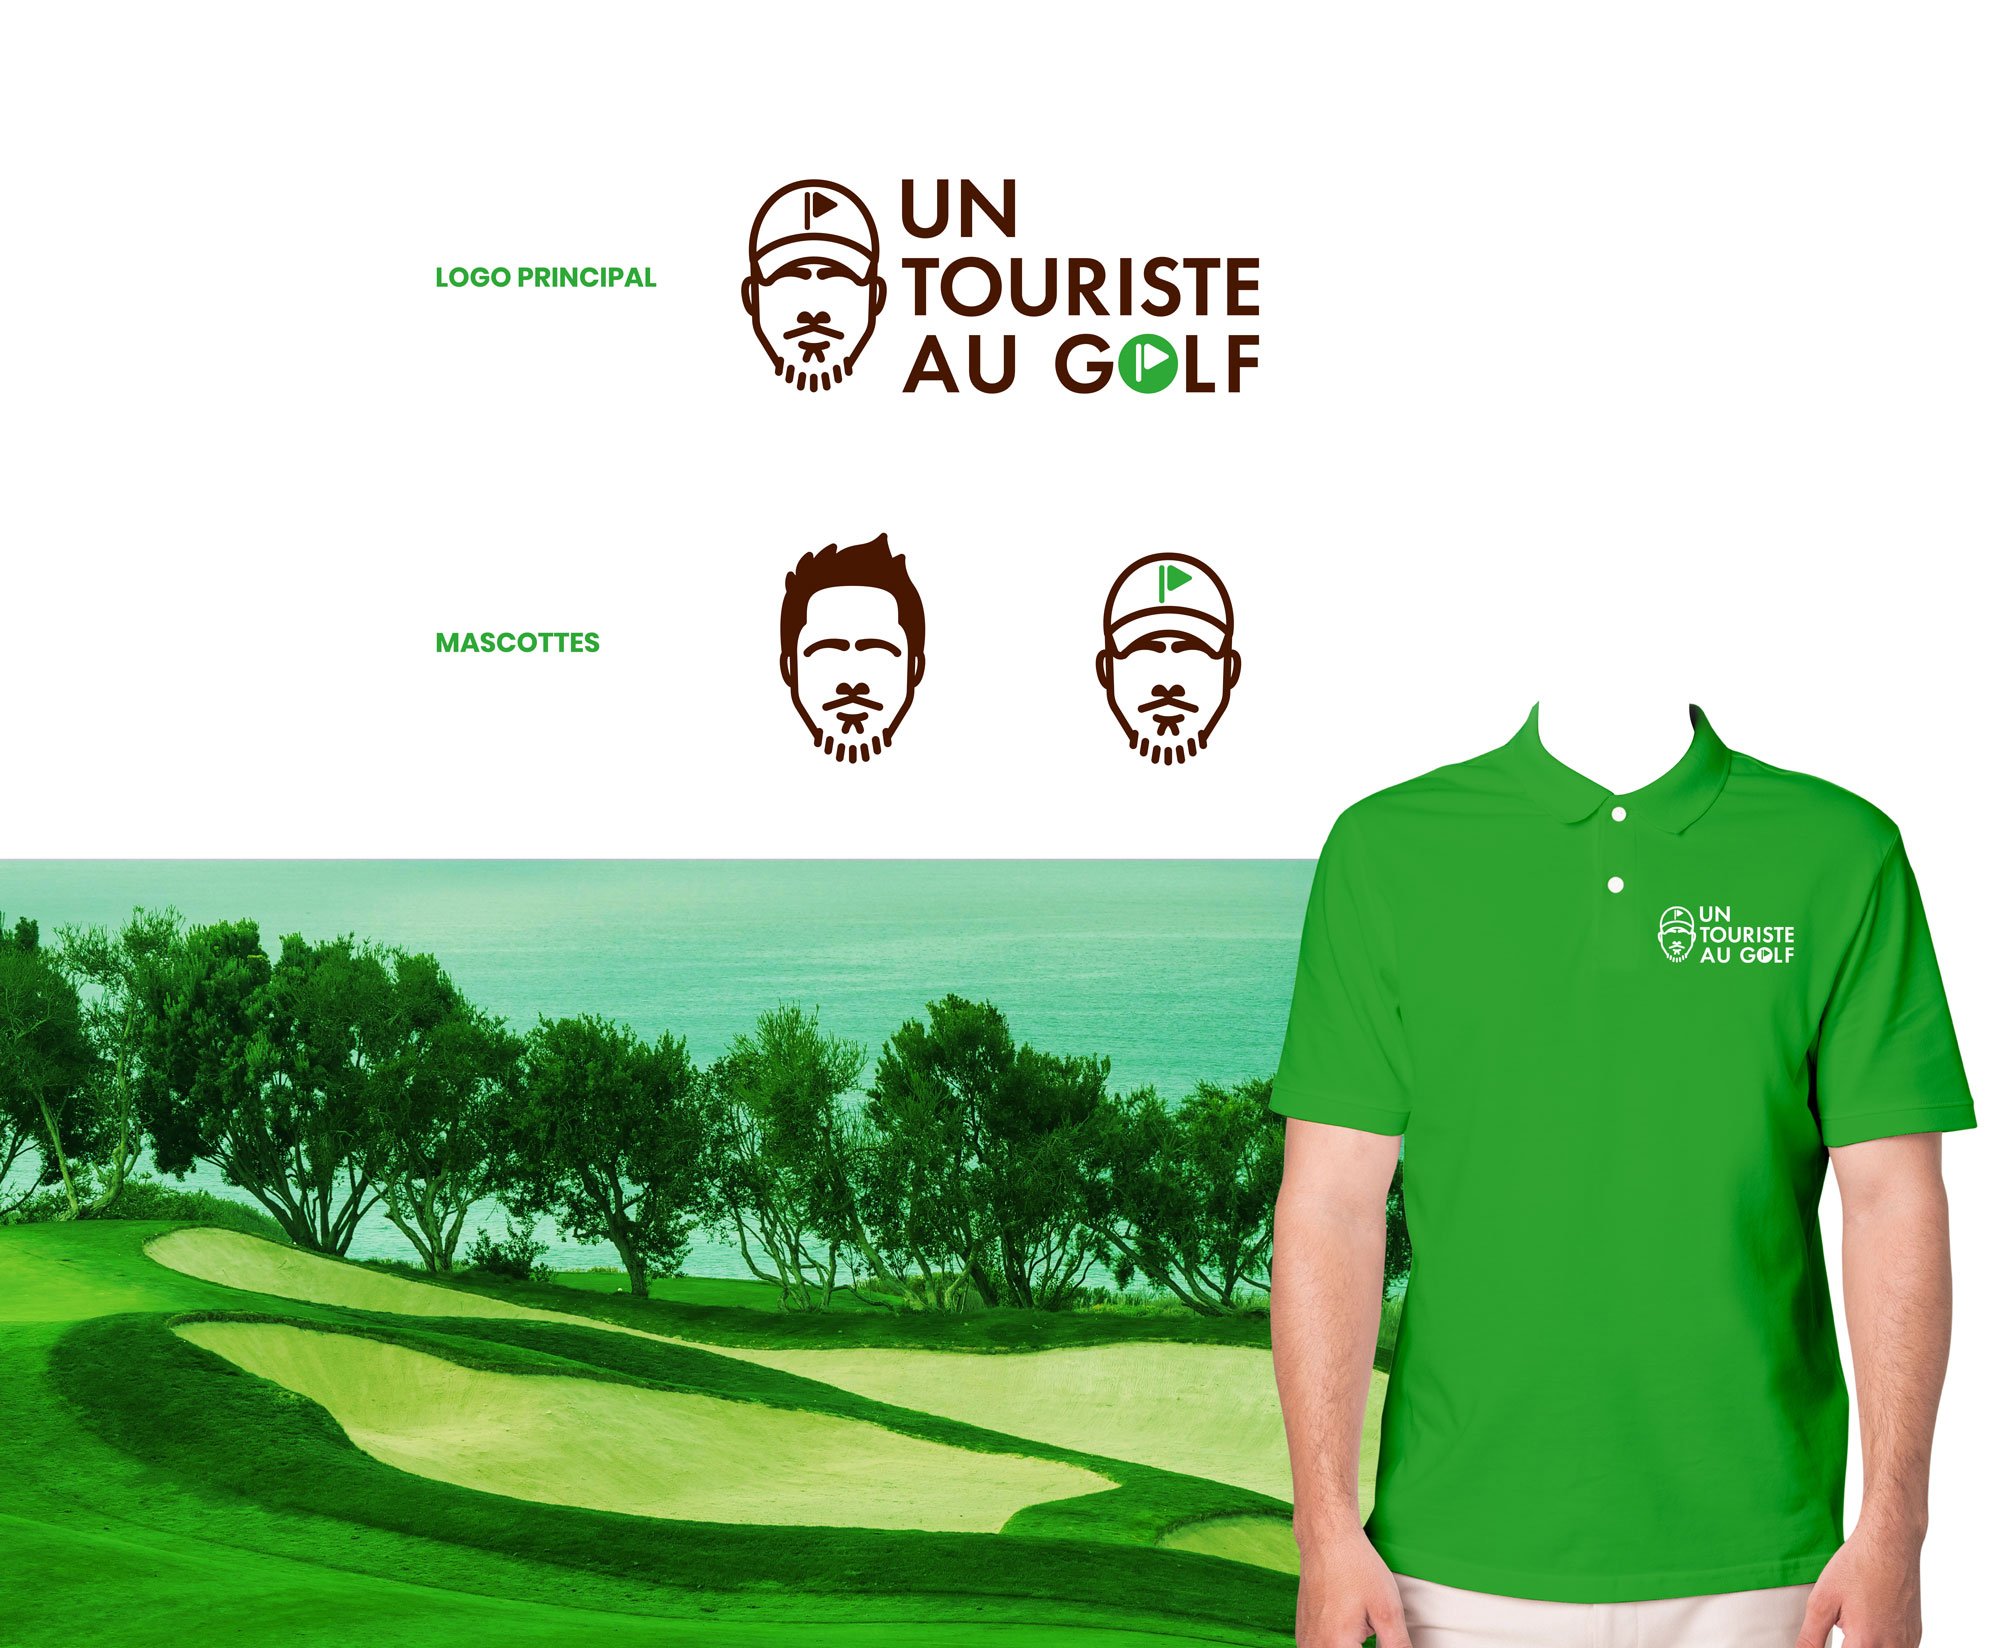 portfolio_un-touriste-au-golf_chaine-youtube_presentation-logo.jpg